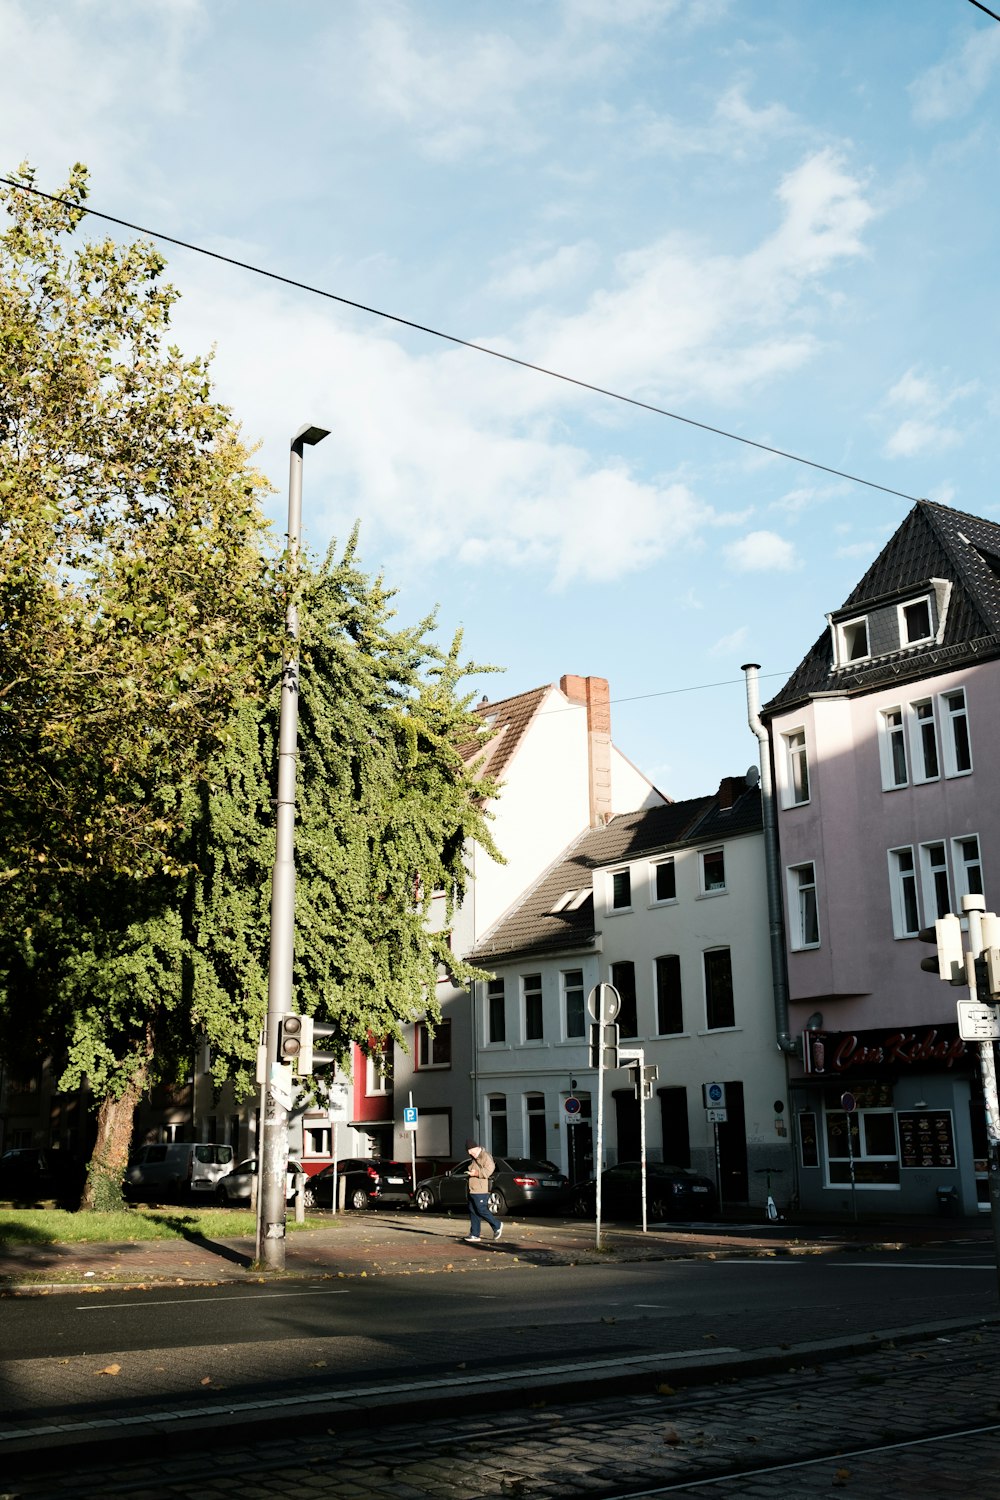 a row of buildings on a street corner